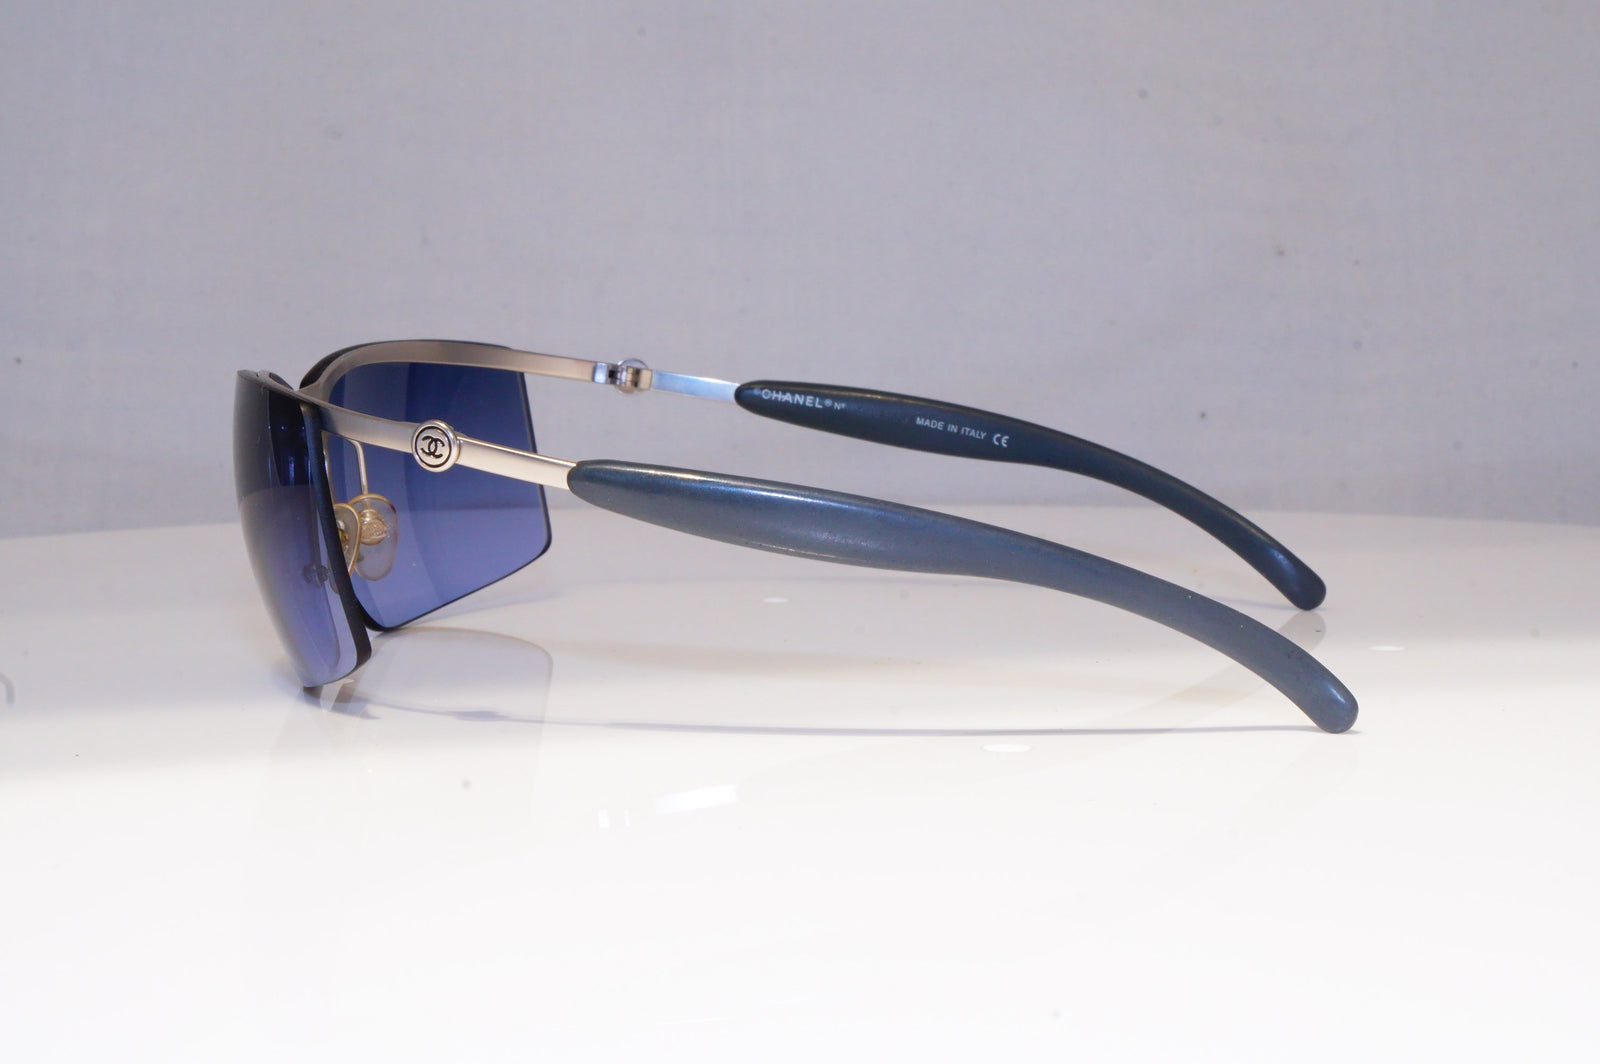 CHANEL 4008 sport blue sunglasses